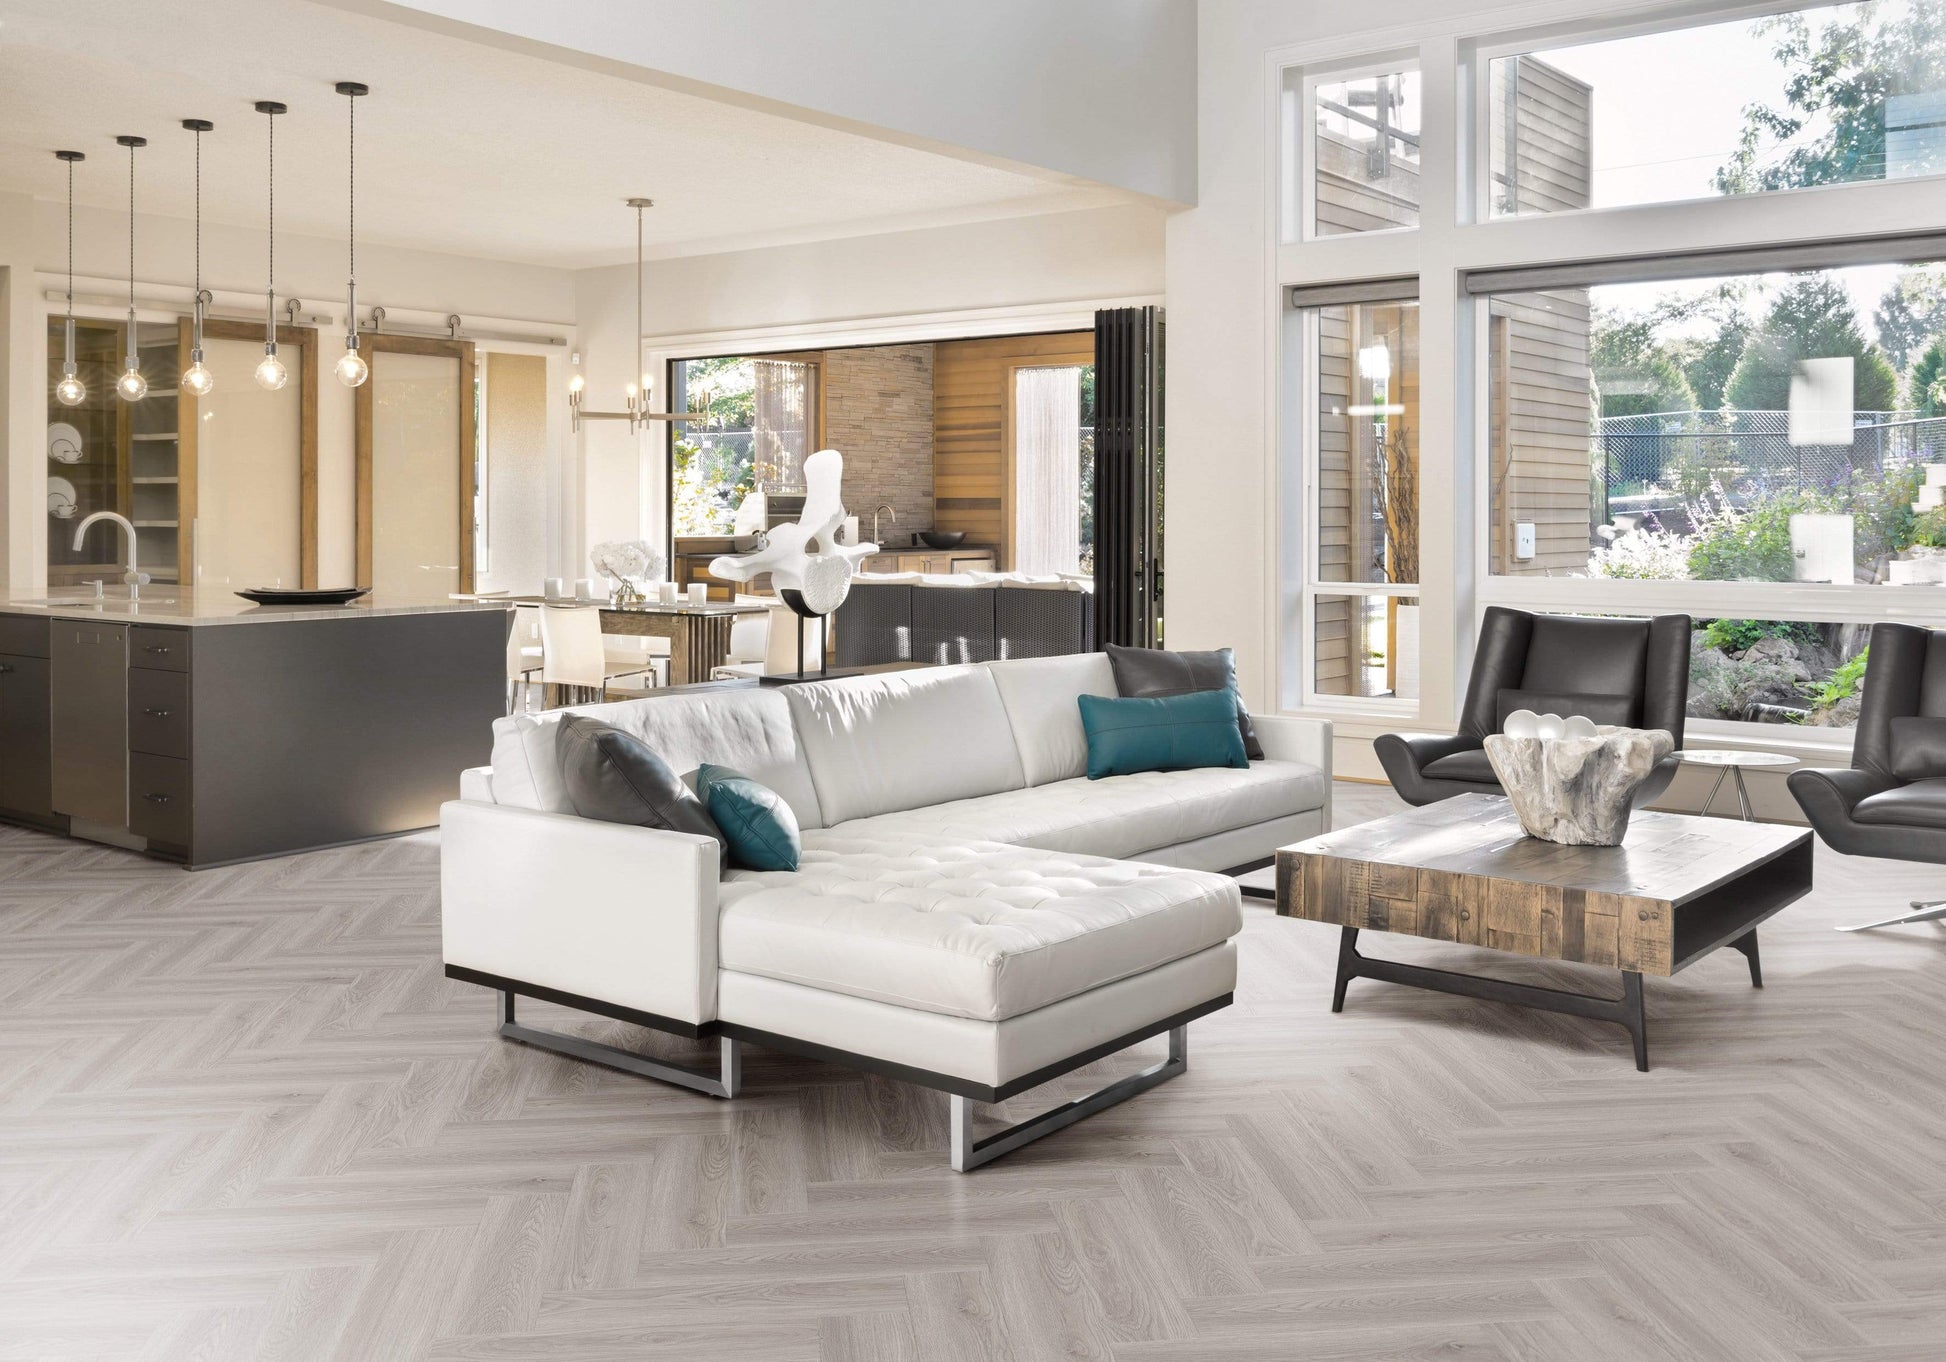 Flooring & Carpet  -  Luvanto Click Pearl Oak Flooring 2.2M  -  50155761